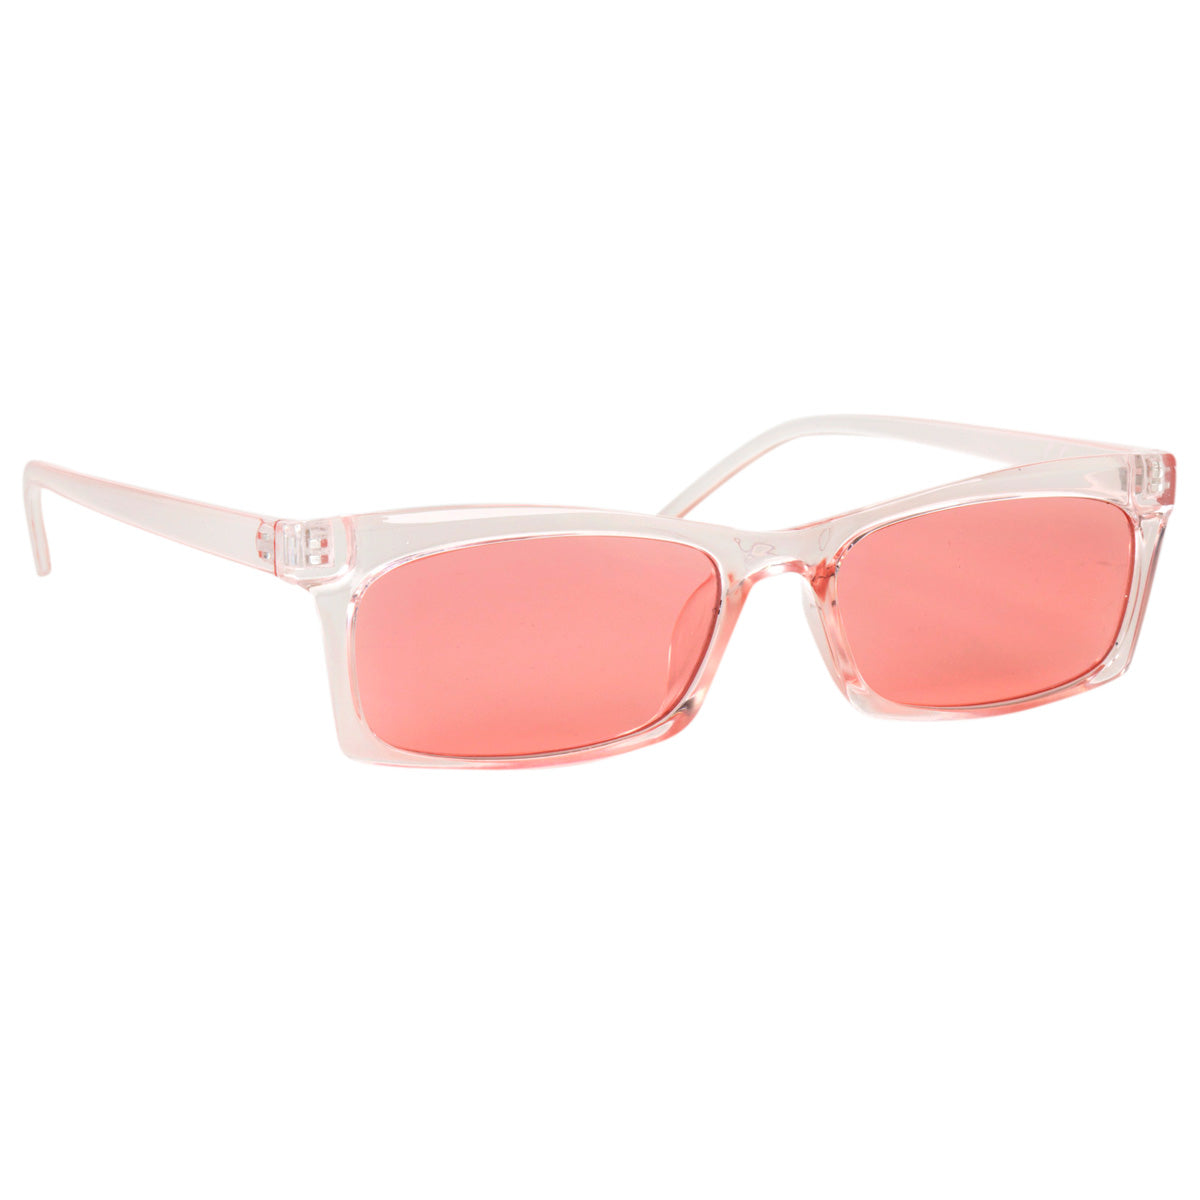 Low angular square sunglasses